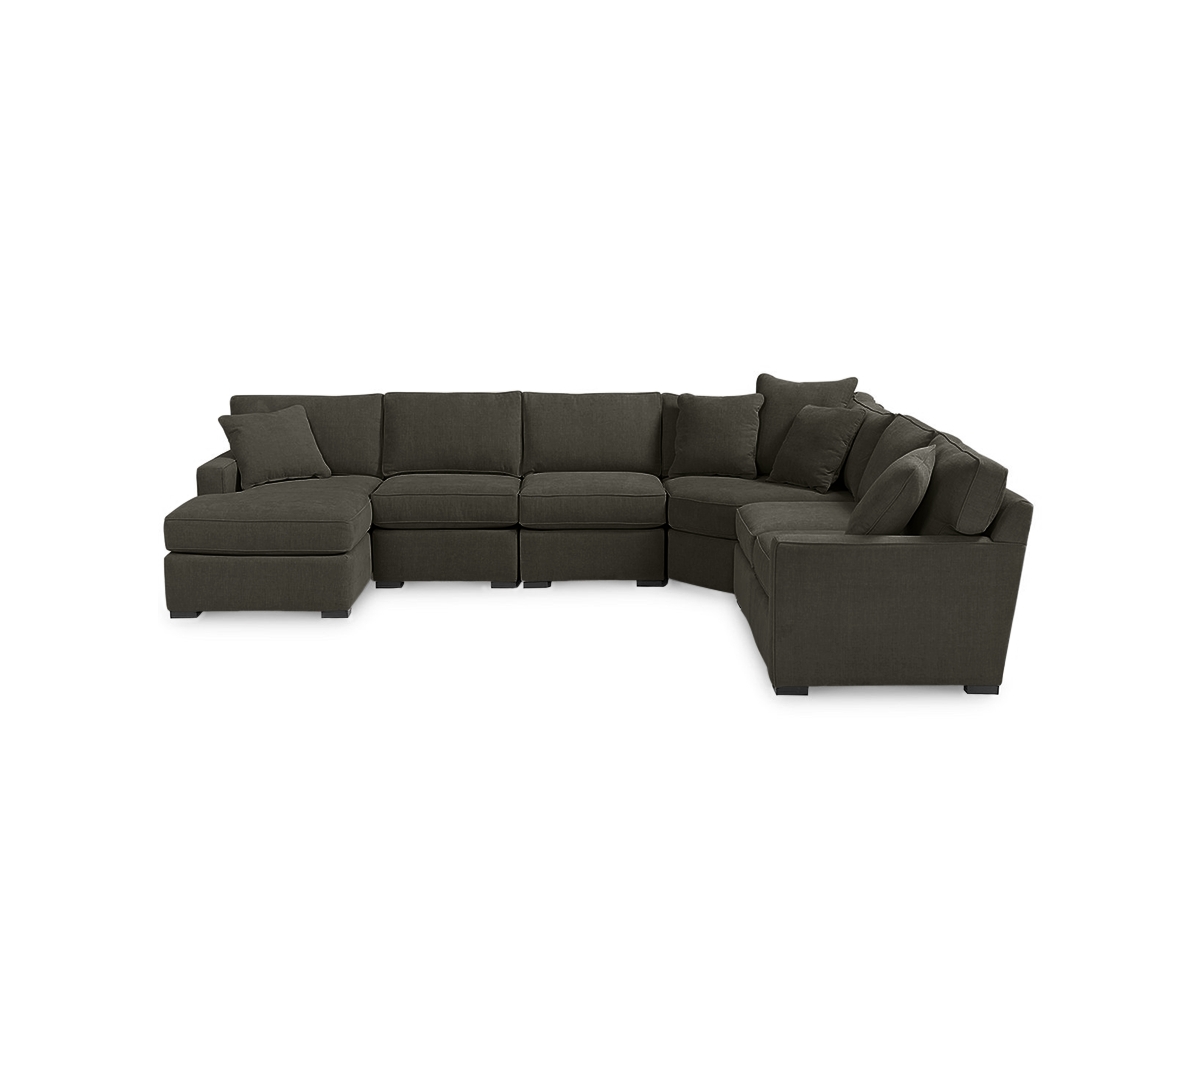 1346283 Radley Fabric 6-Piece Chaise Sectional Sofa, Creat sku 1346283